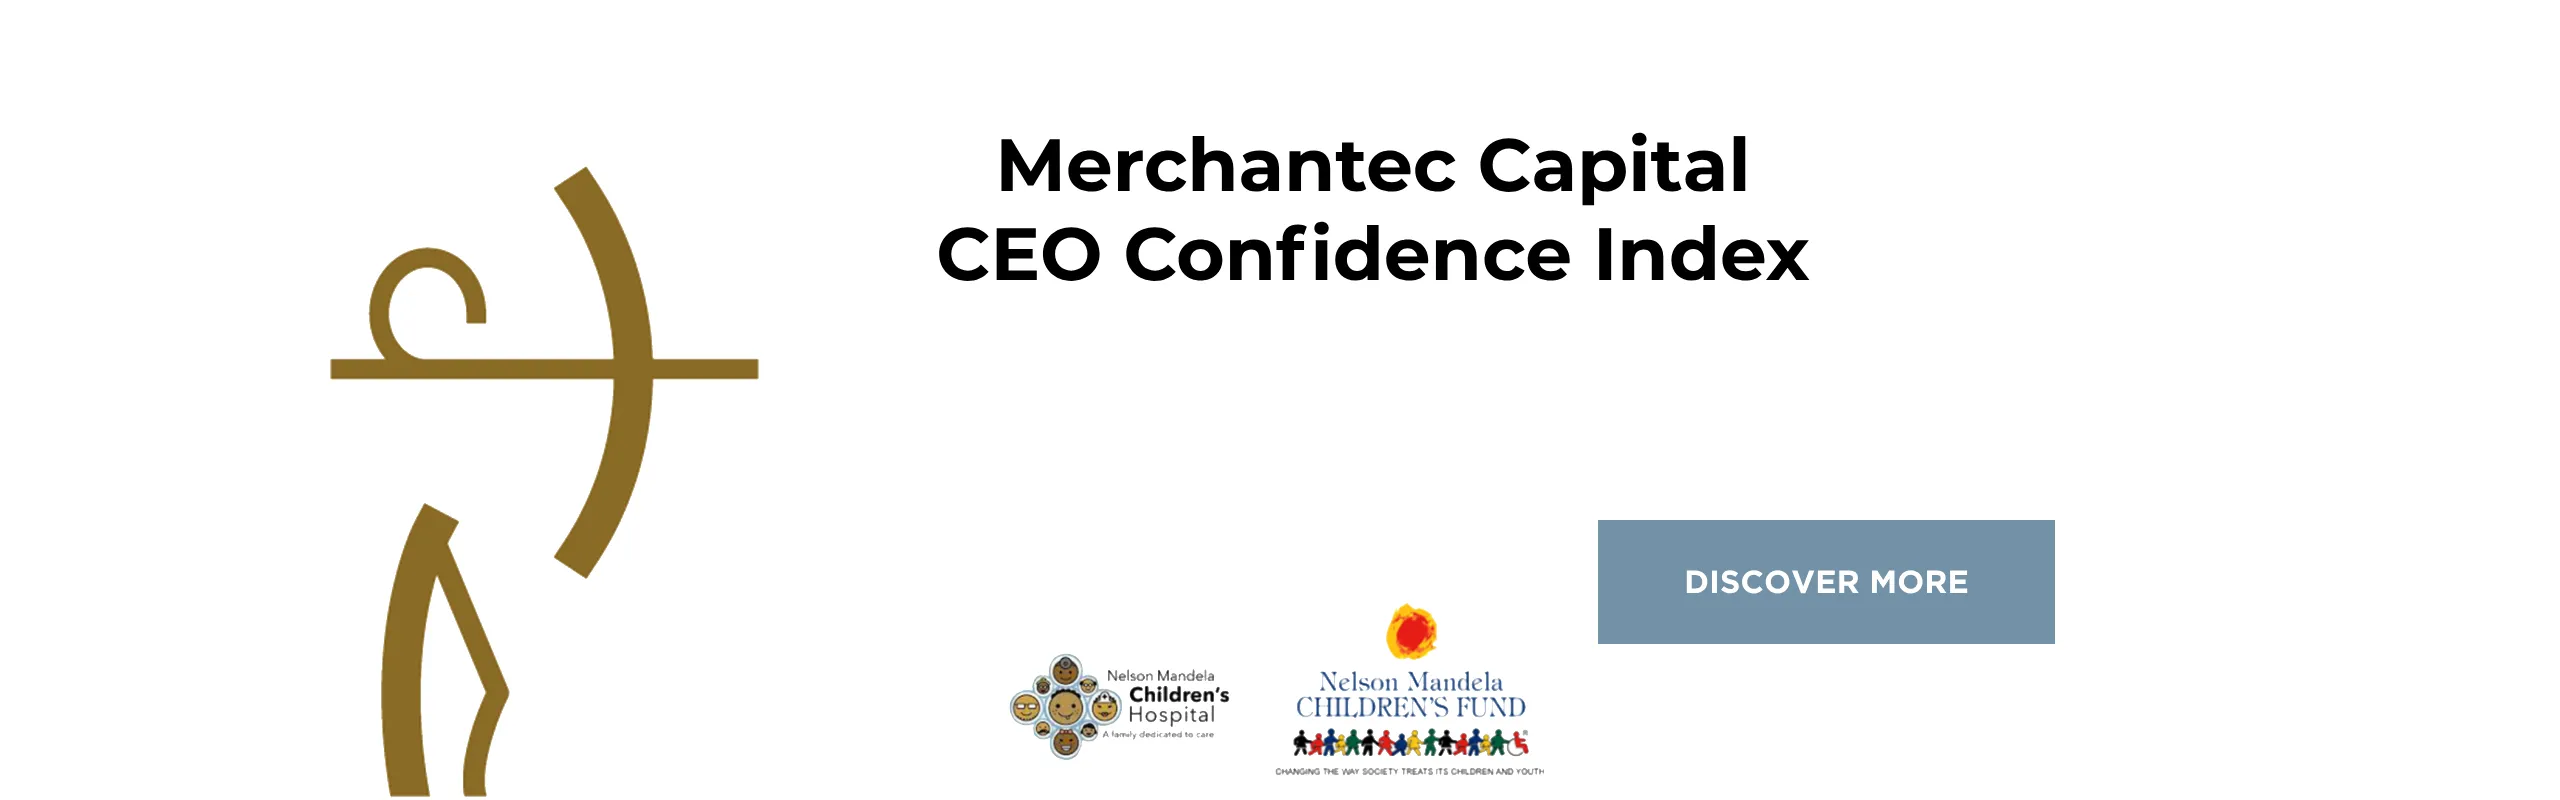 Merchantec Capital's CEO Confidence Index